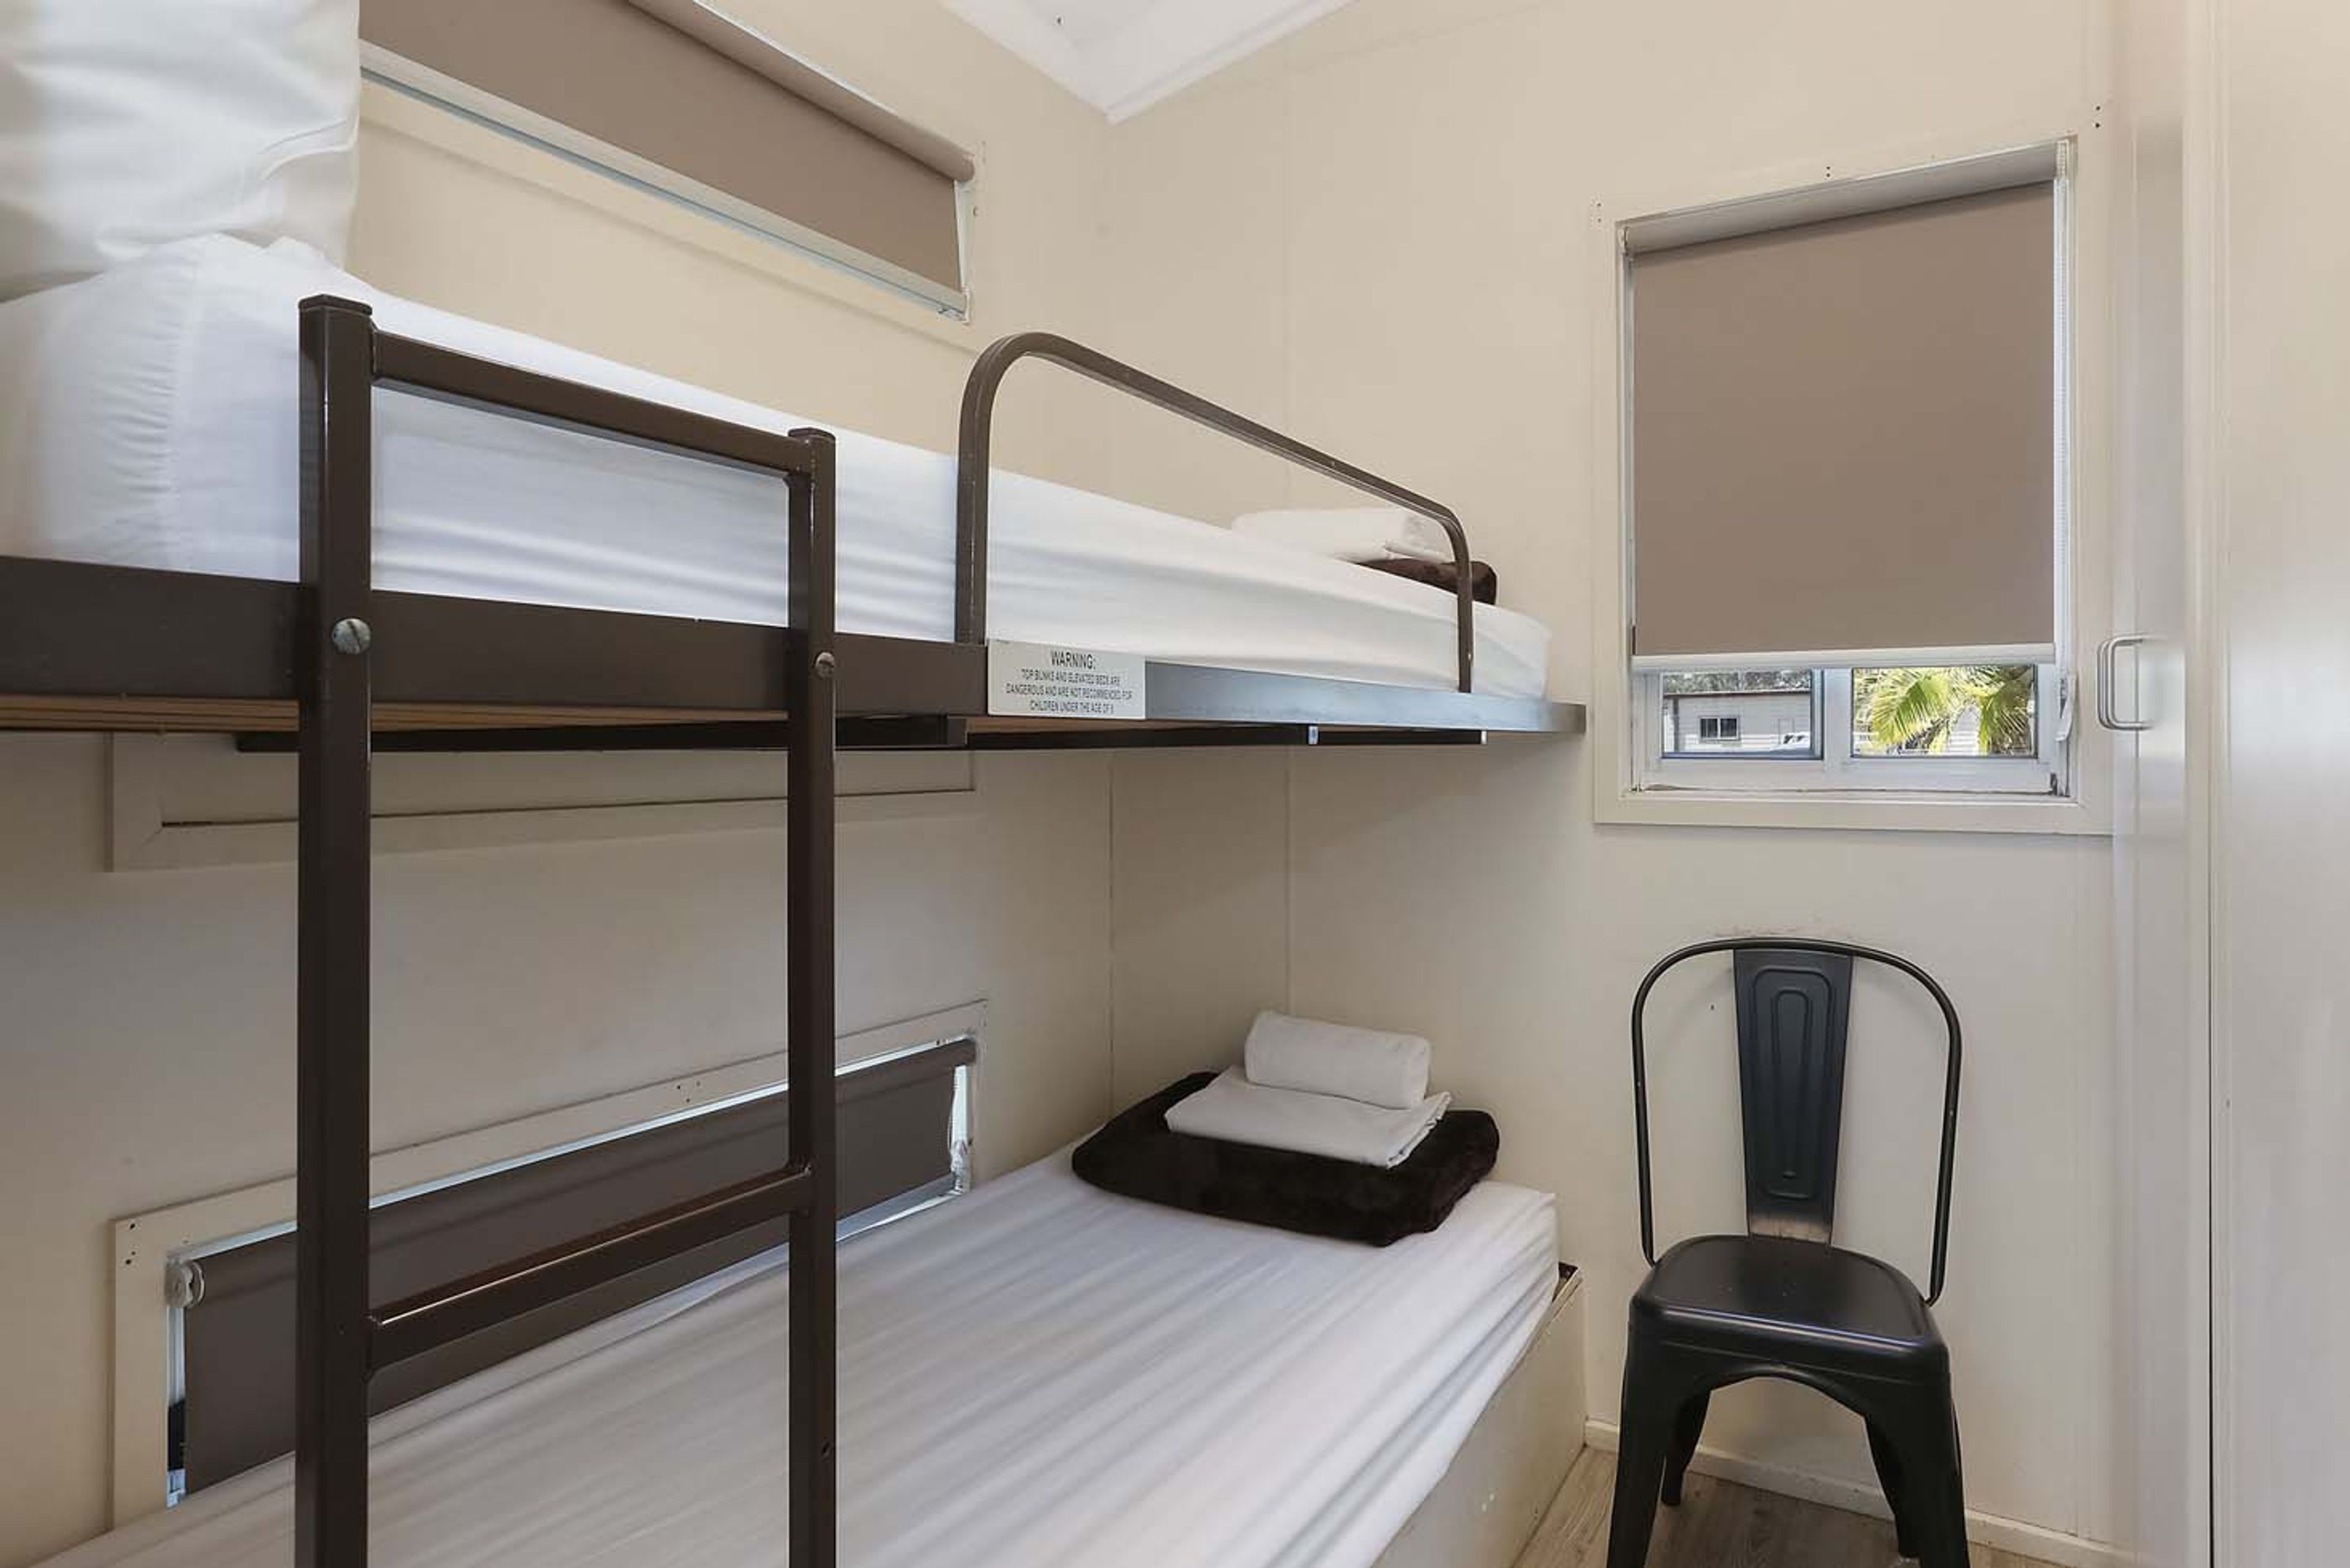 Coffs Harbour - Standard cabin sleeps 4 - bed 2 bu